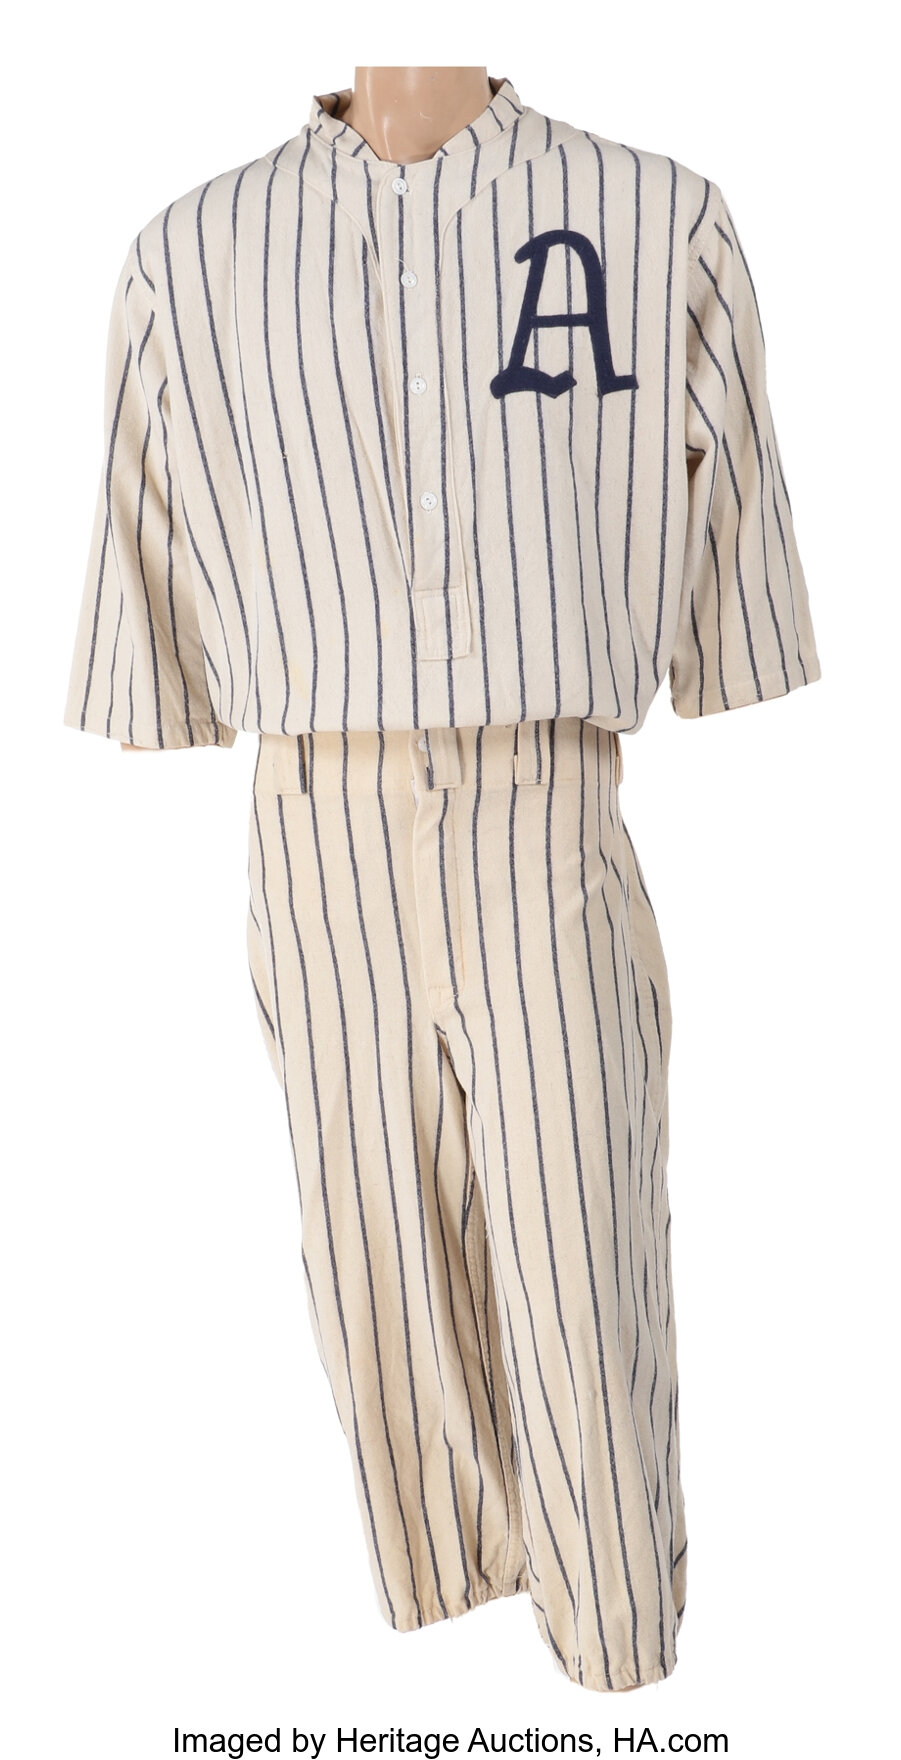 Tommy Lee Jones Ty Cobb Philadelphia Athletics uniform from